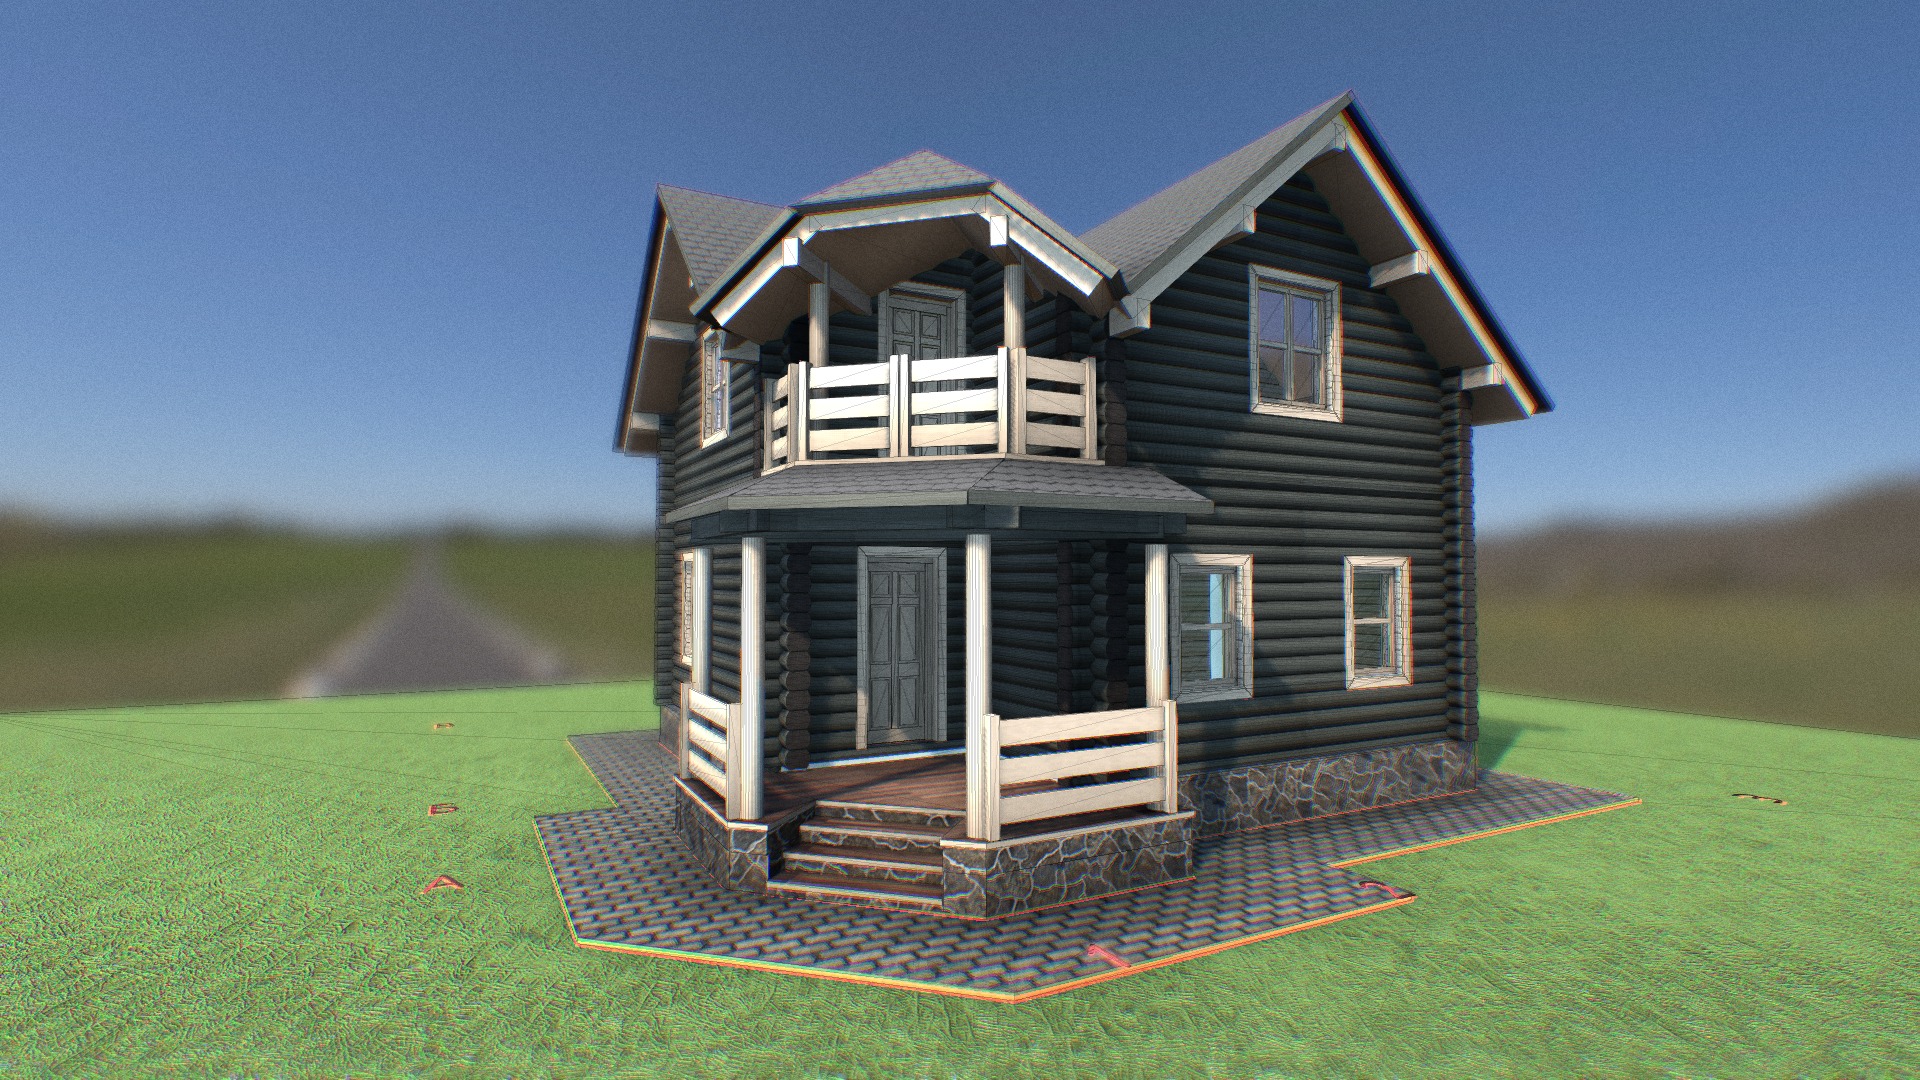 3D model Эскиз 03 - This is a 3D model of the Эскиз 03. The 3D model is about a small house on a grassy hill.